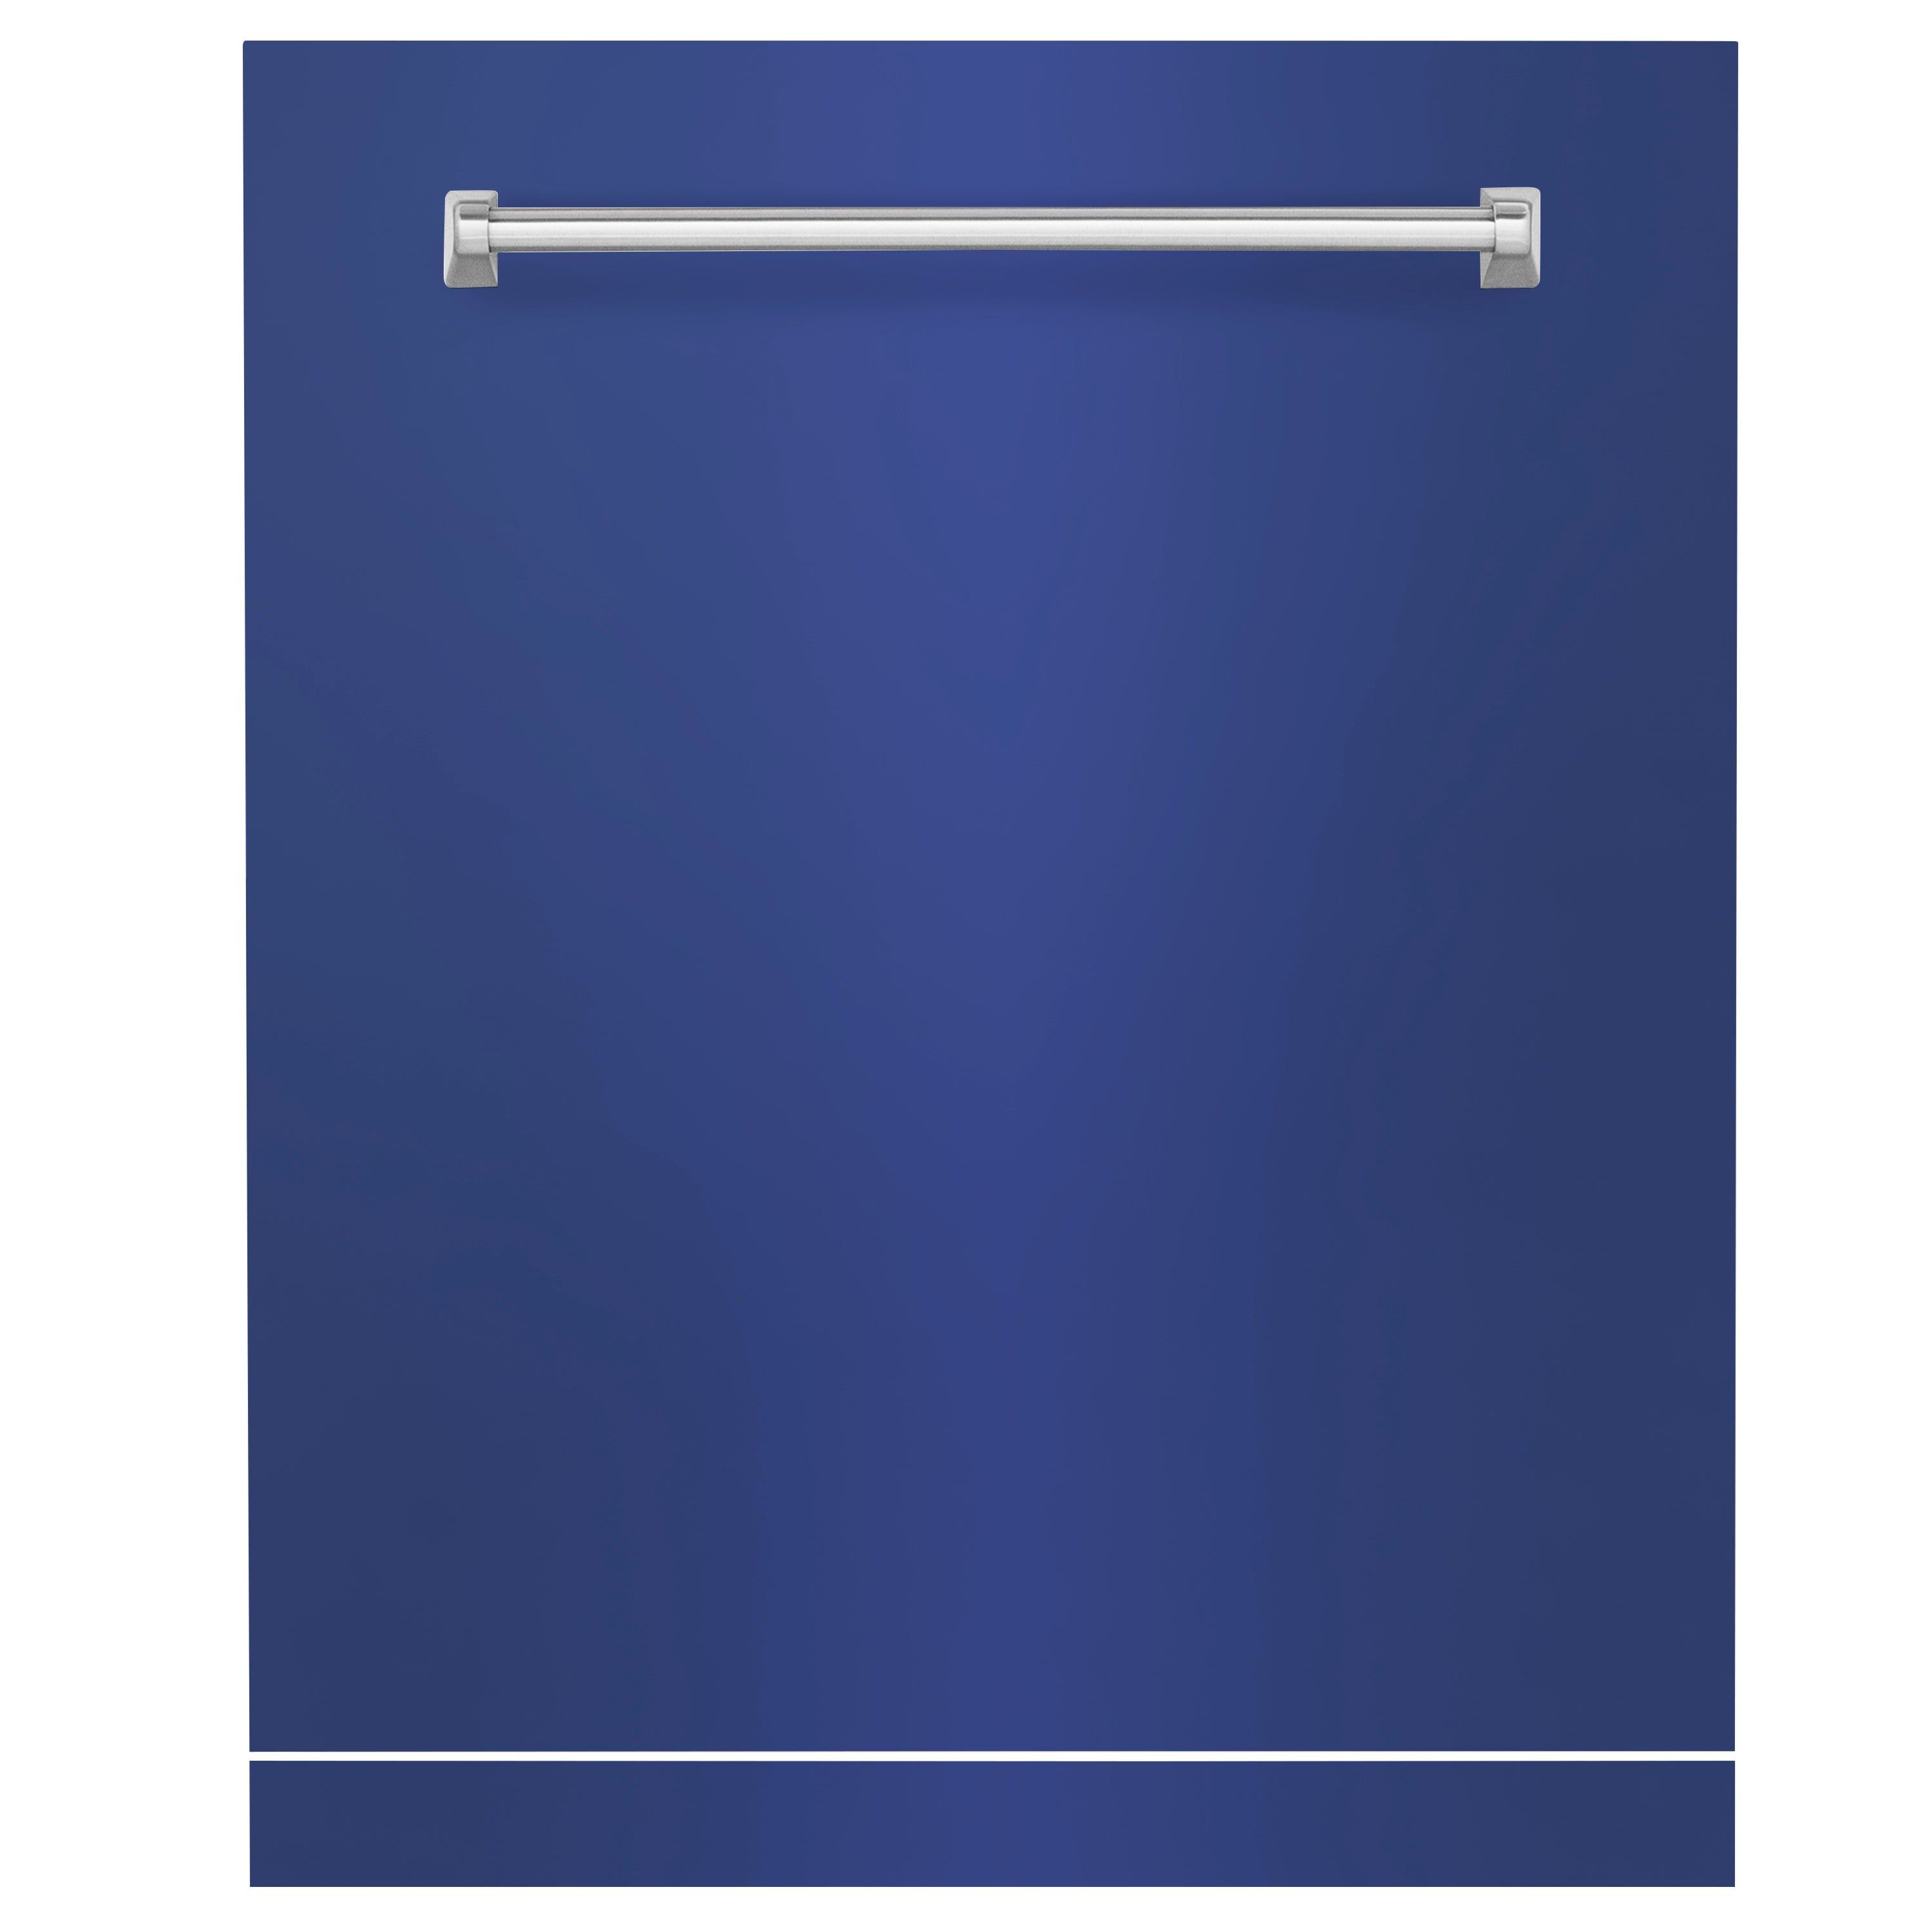 ZLINE 24" Monument Dishwasher Panel in Blue Matte with Traditional Handle (DPMT-BM-24)